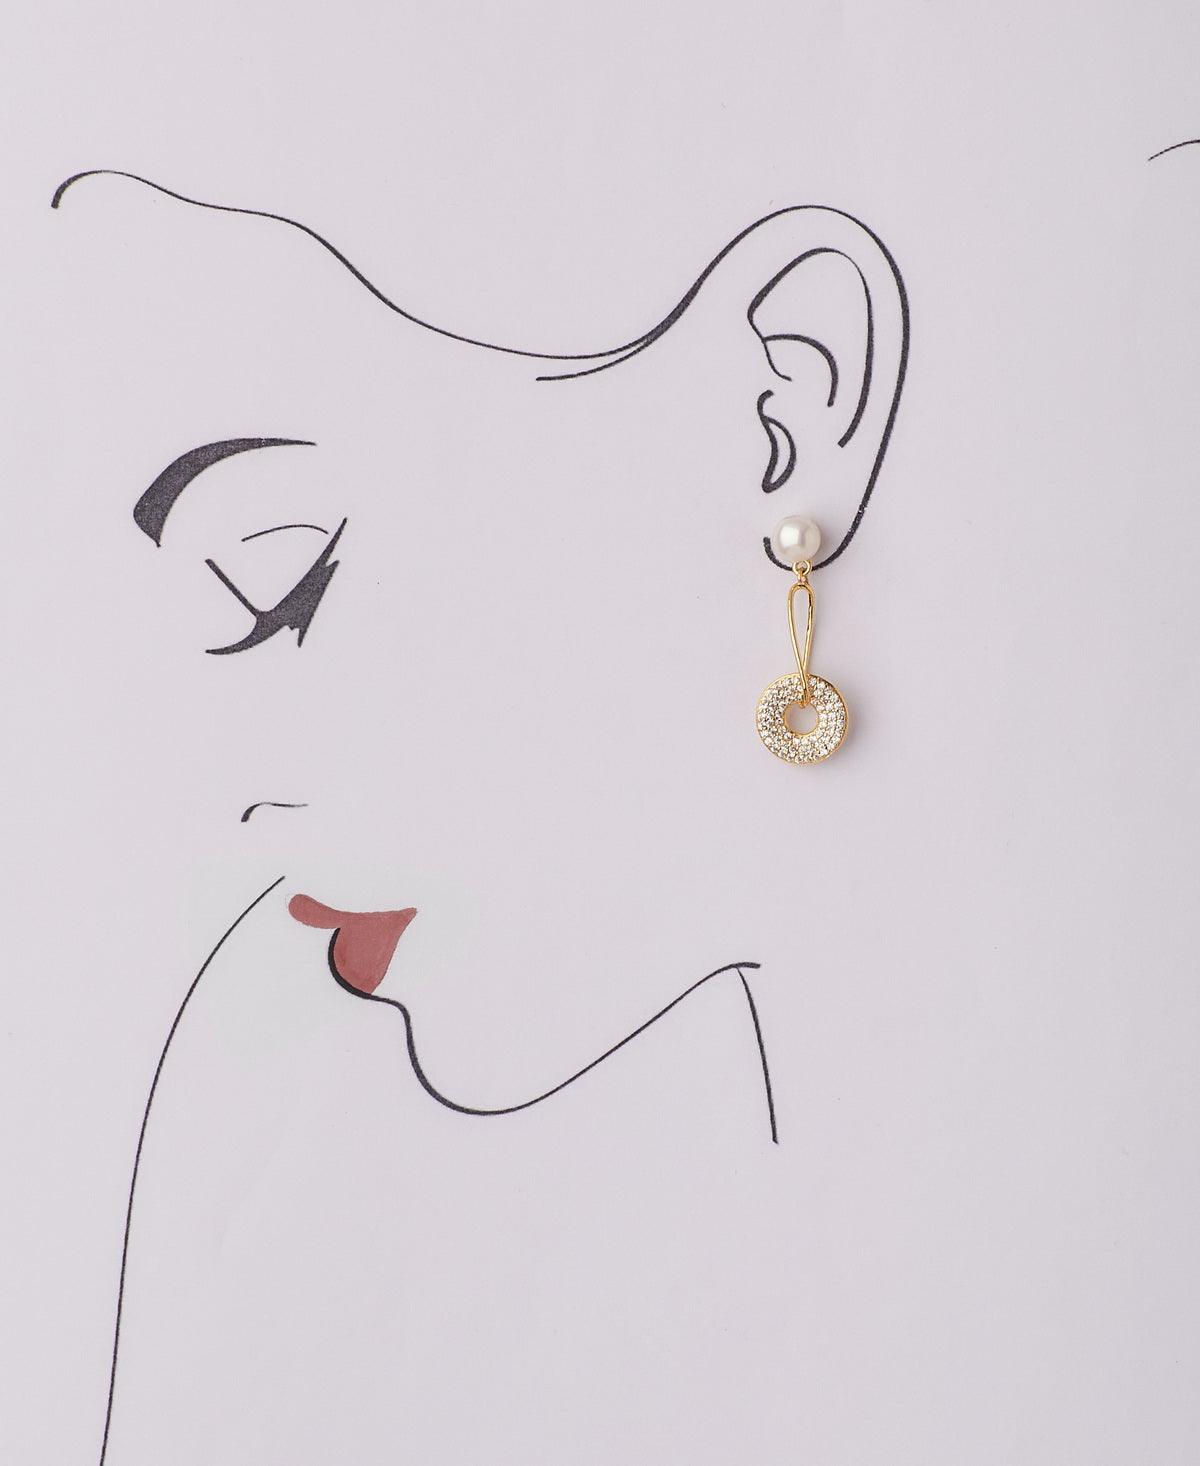 Classy Hanging Pearl Earring - Chandrani Pearls